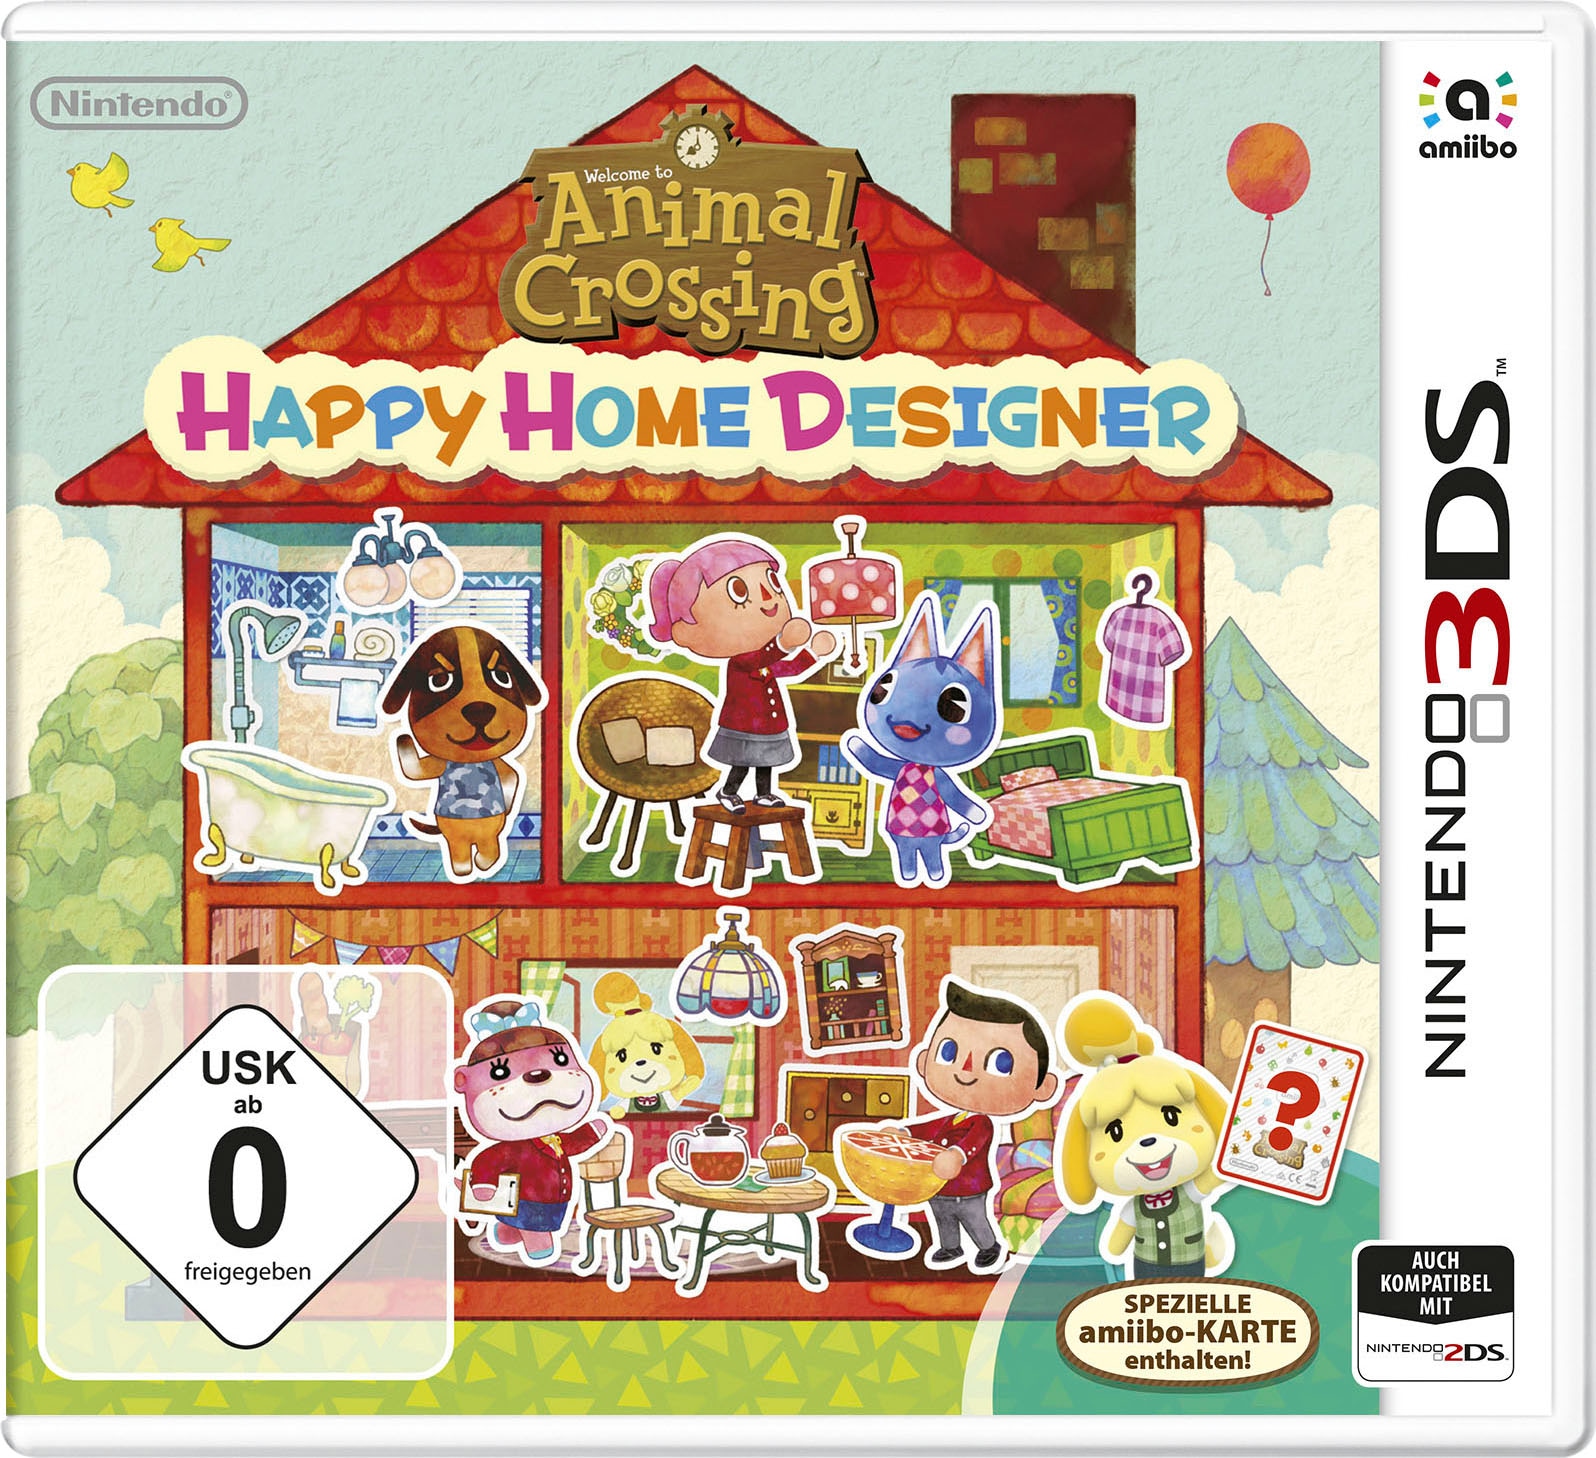 Nintendo 3DS Spielesoftware »Animal Crossing Happy Home Designer«, Nintendo 3DS, inkl. Amiibo Karte